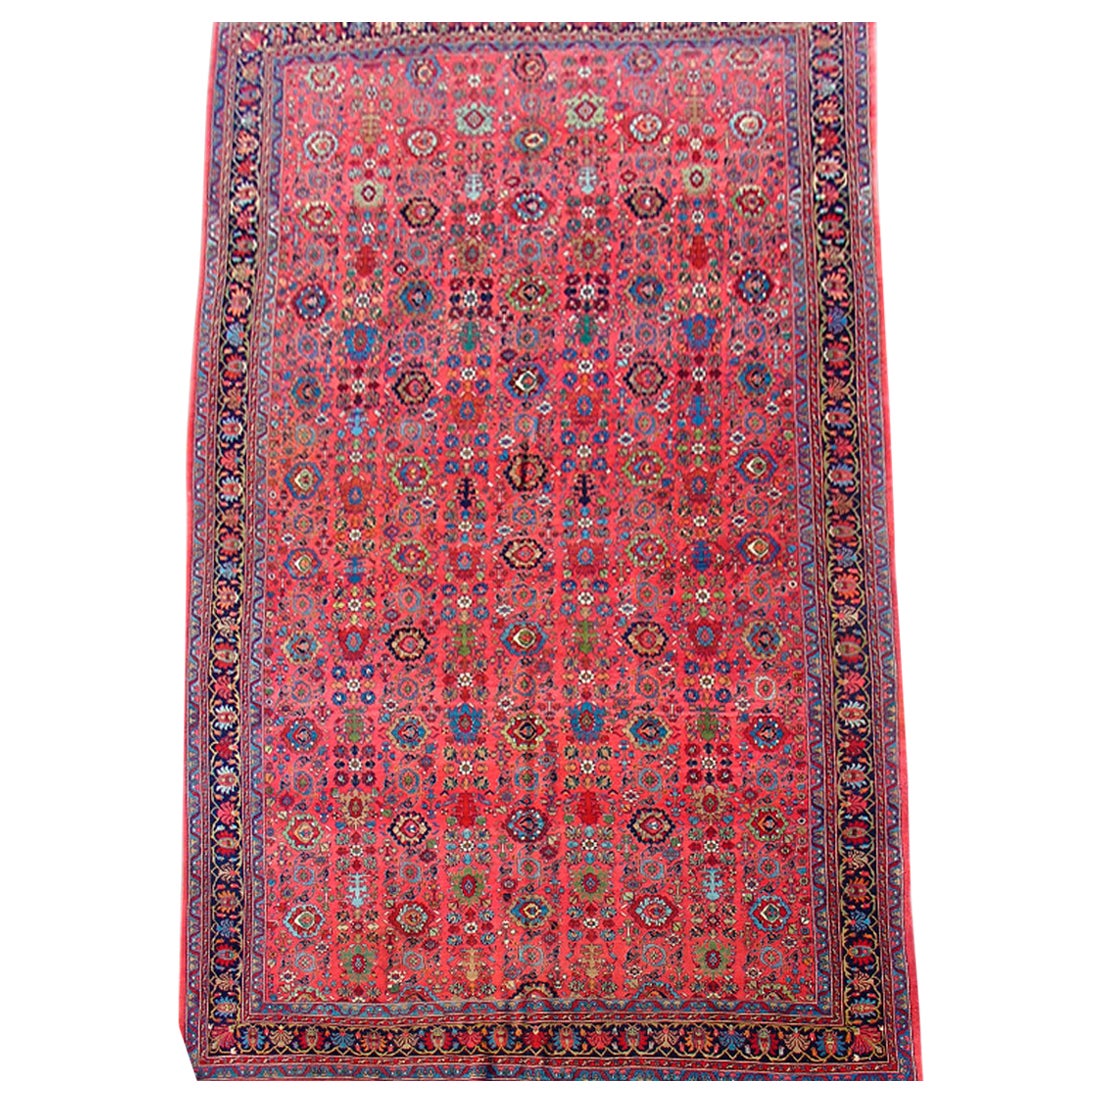 Antique Oversized Persian Bidjar Carpet, Early 20th Century For Sale